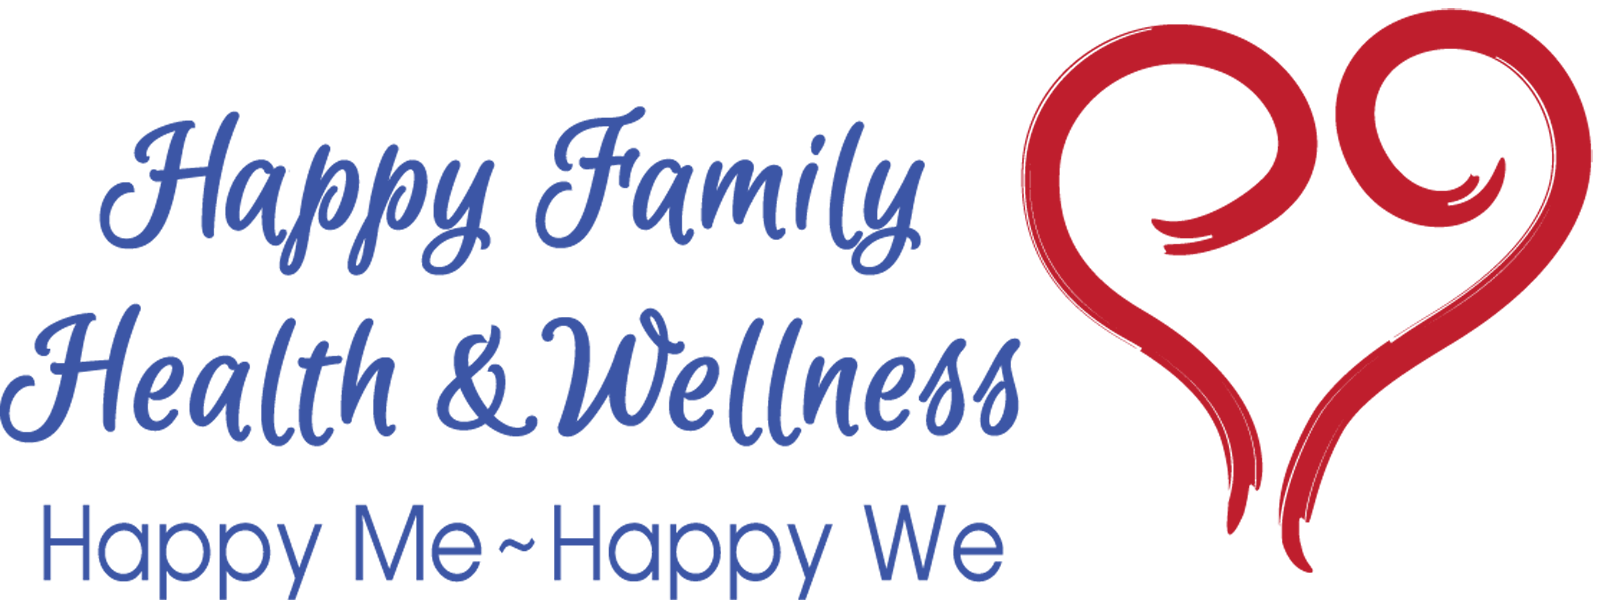 Happy Family Health and Wellness